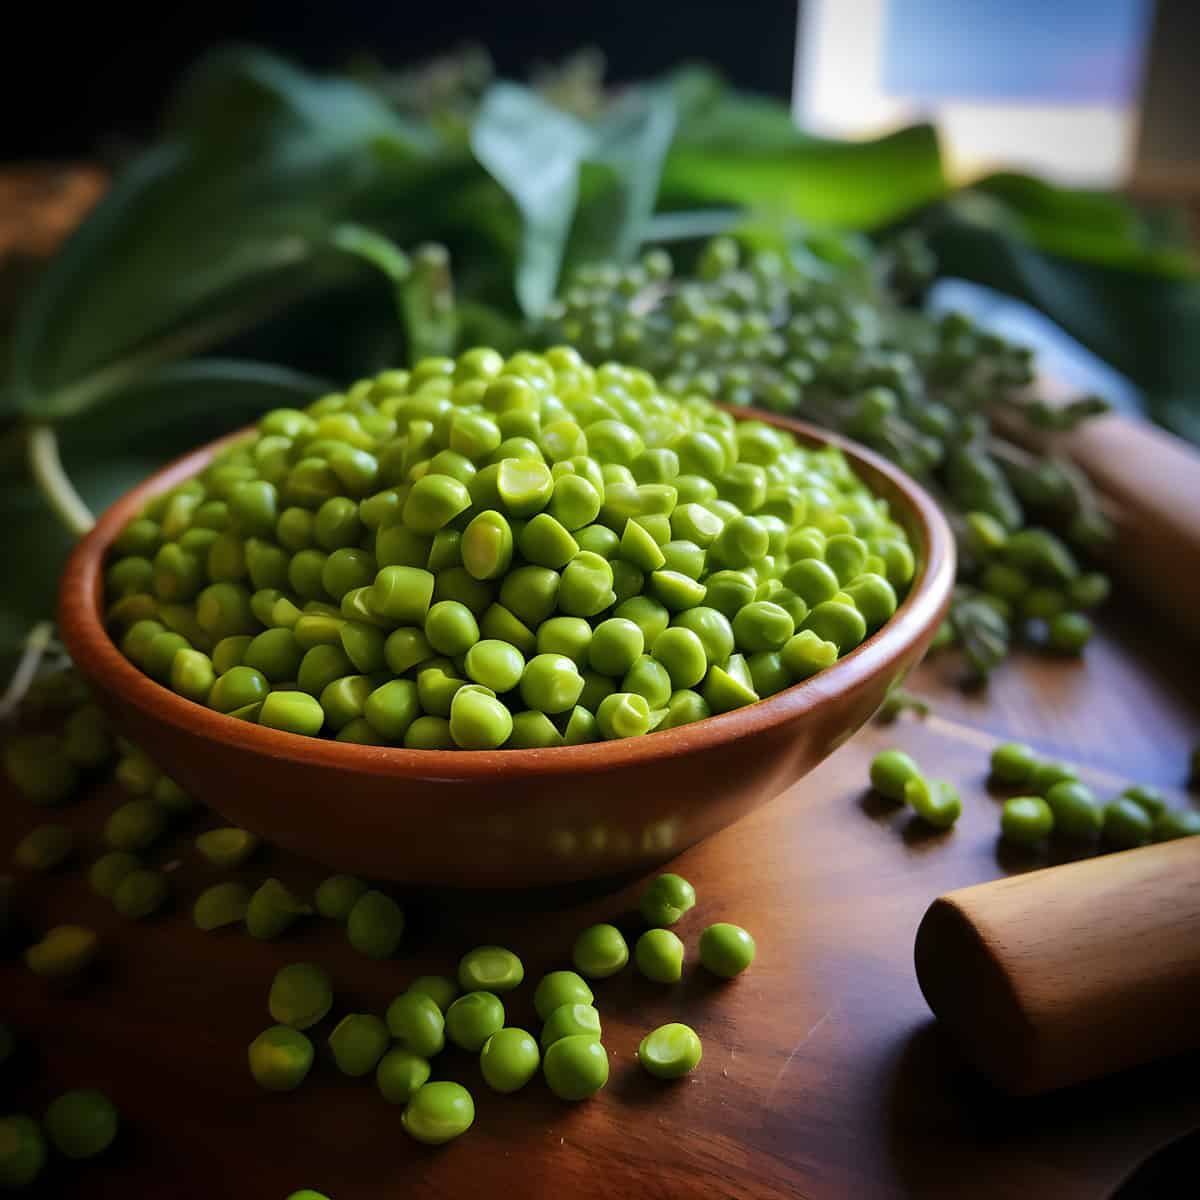 Gandules Peas on a kitchen counter